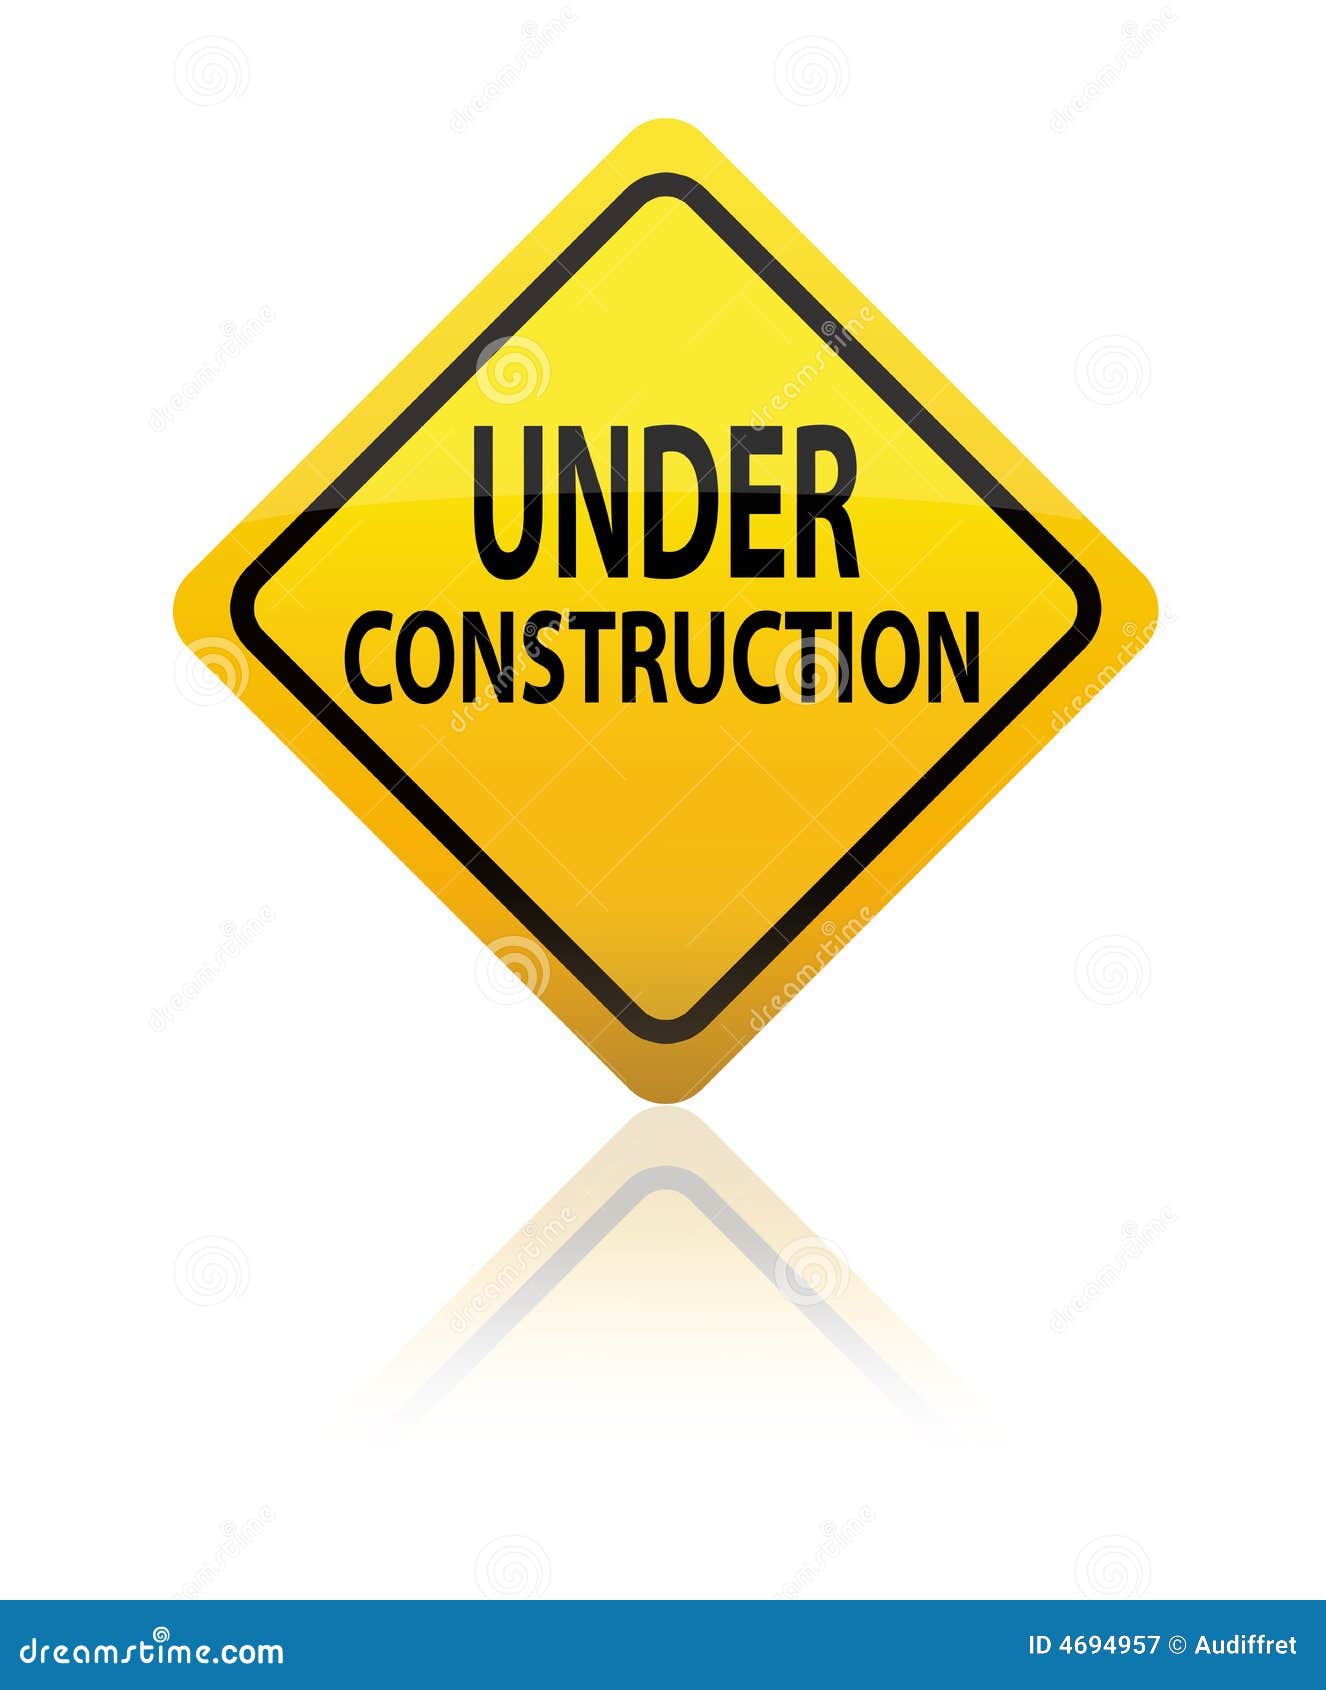 under construction signs clip art - photo #29